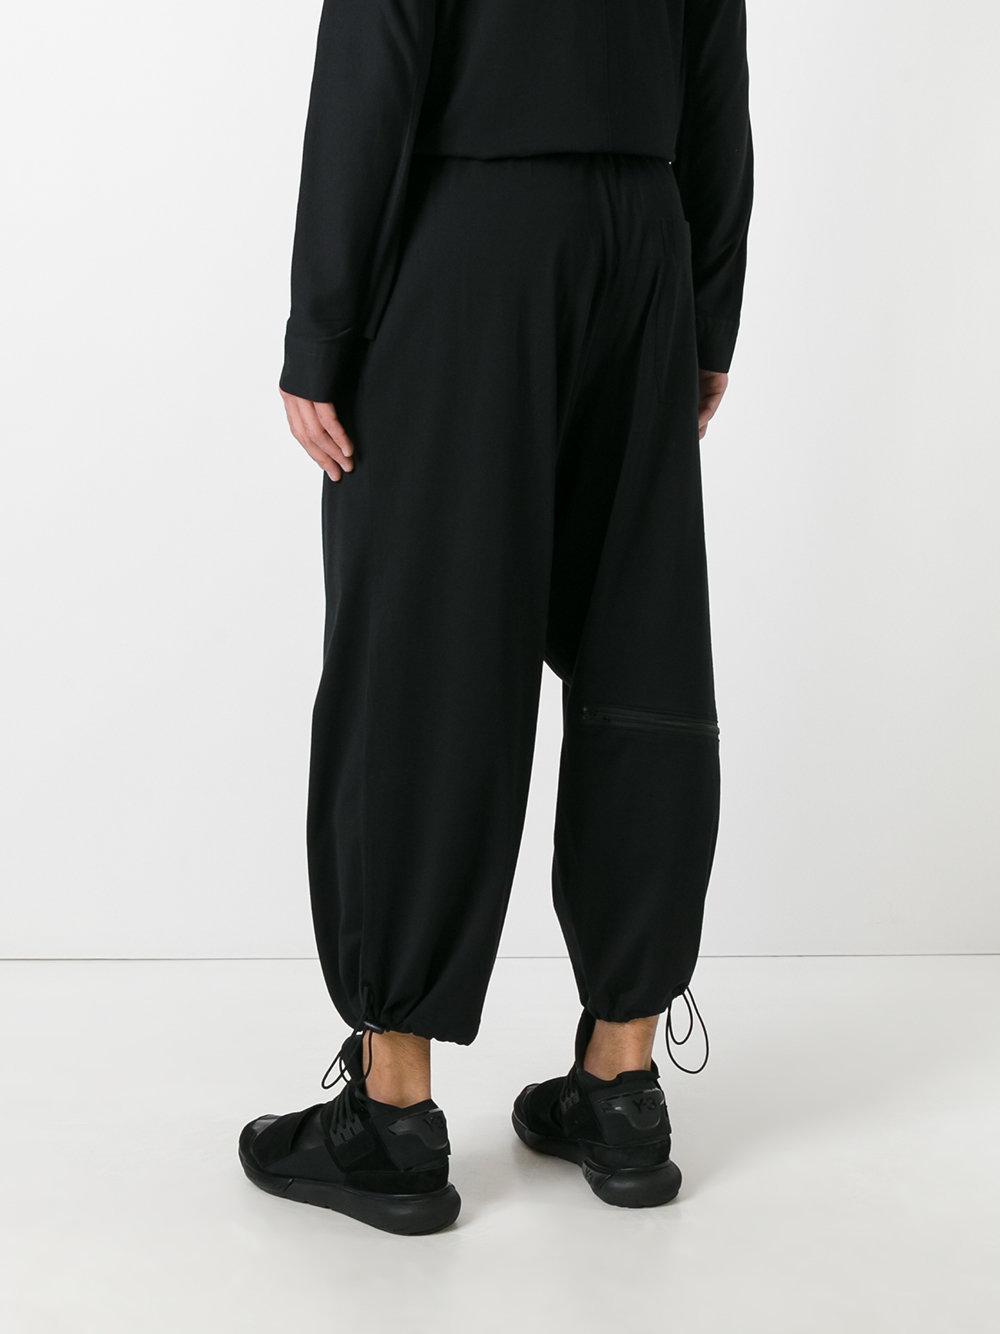 Y-3 Cotton Ninja Pants in Black for Men - Lyst